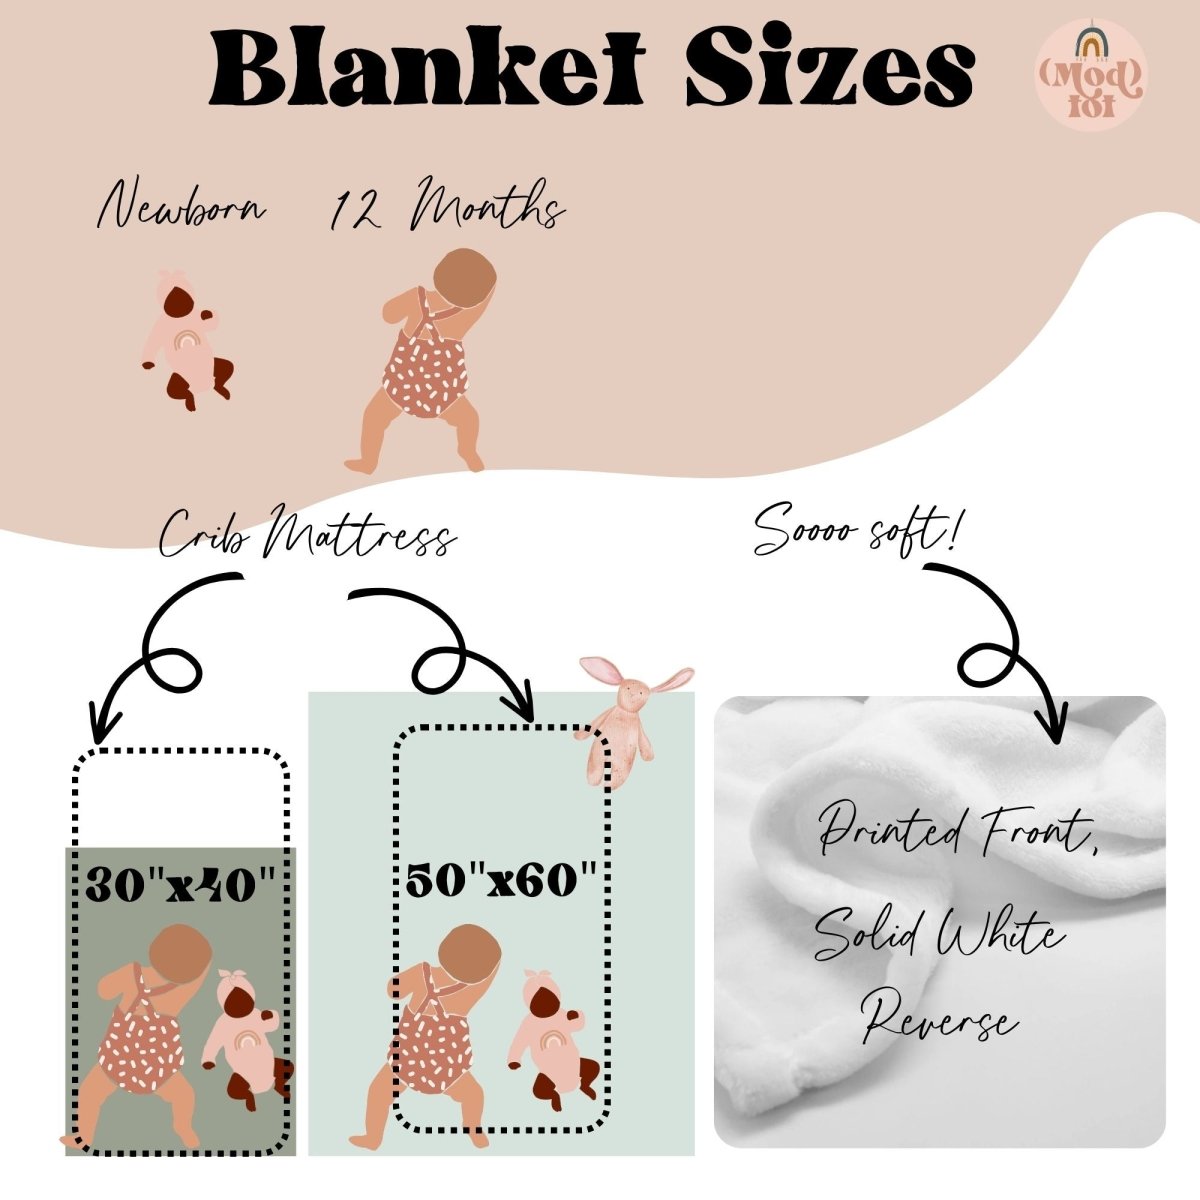 Safari Babe Personalized Minky Blanket - gender_girl, Personalized_Yes, Safari Babe